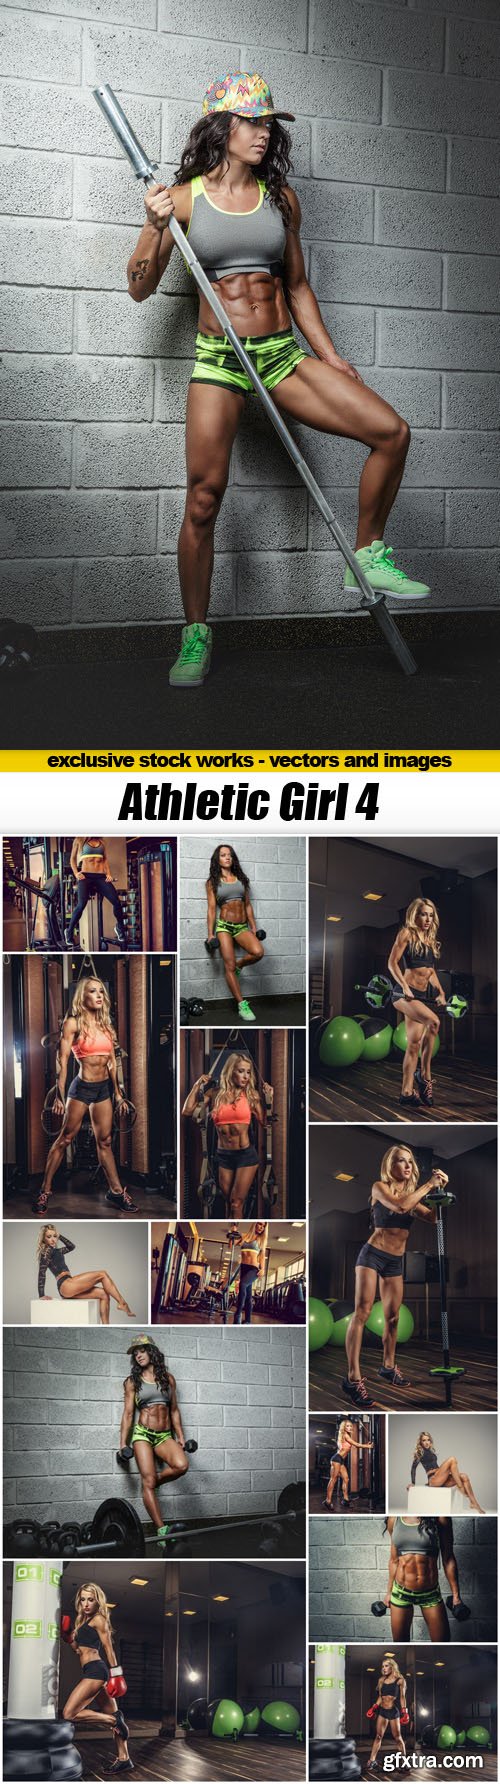 Athletic Girl 4 - 15xUHQ JPEG